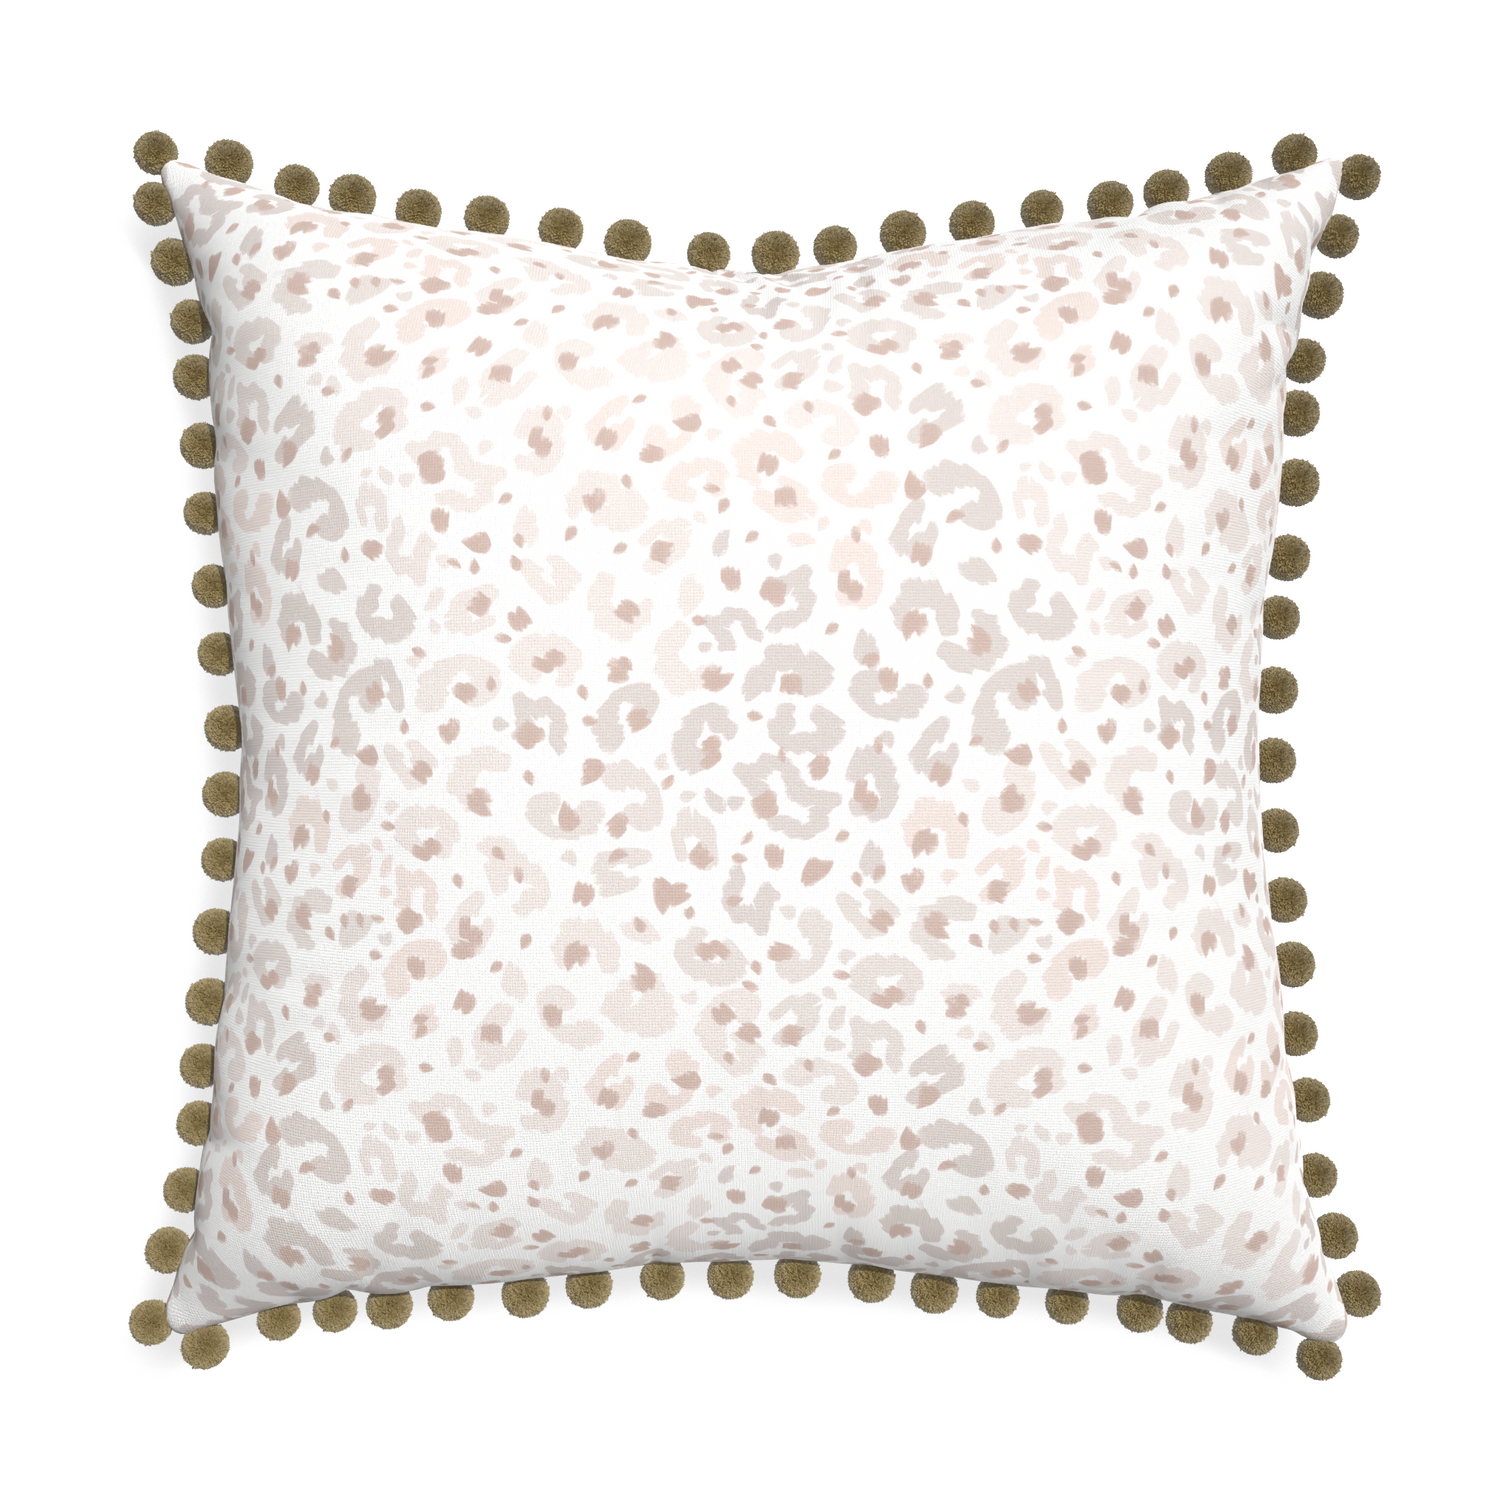 Euro-sham rosie custom pillow with olive pom pom on white background